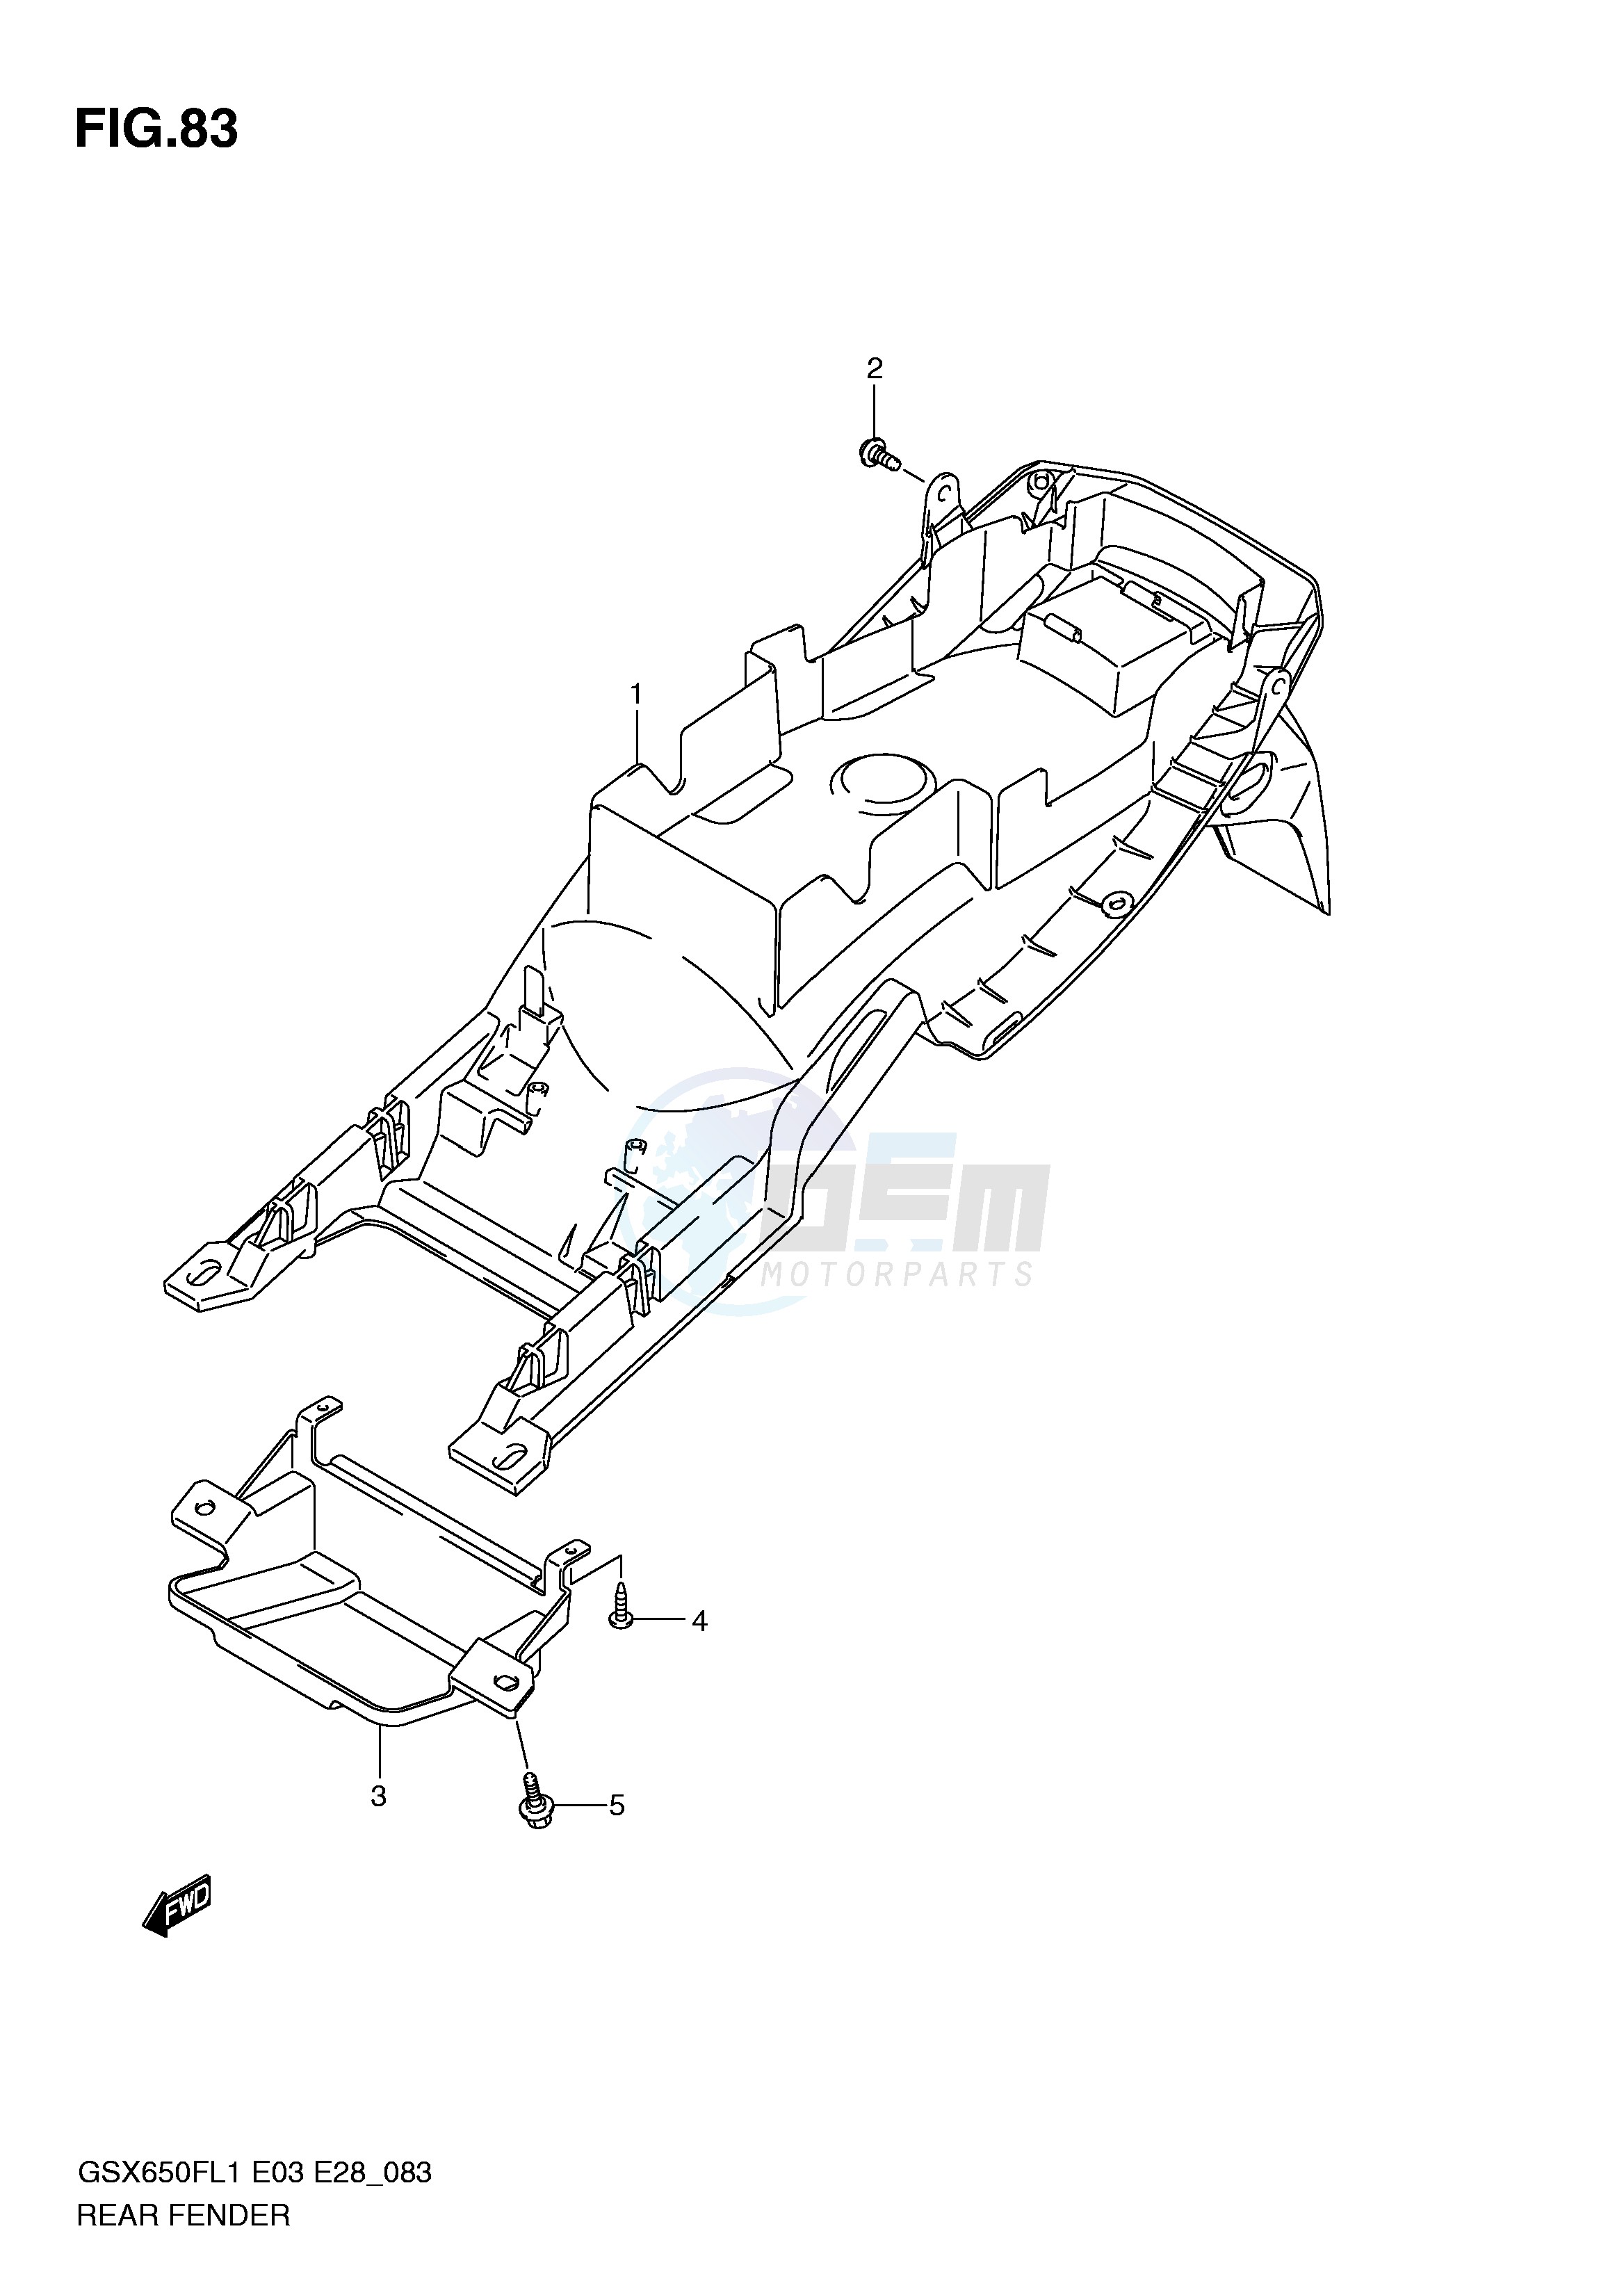 REAR FENDER (GSX650FL1 E33) blueprint